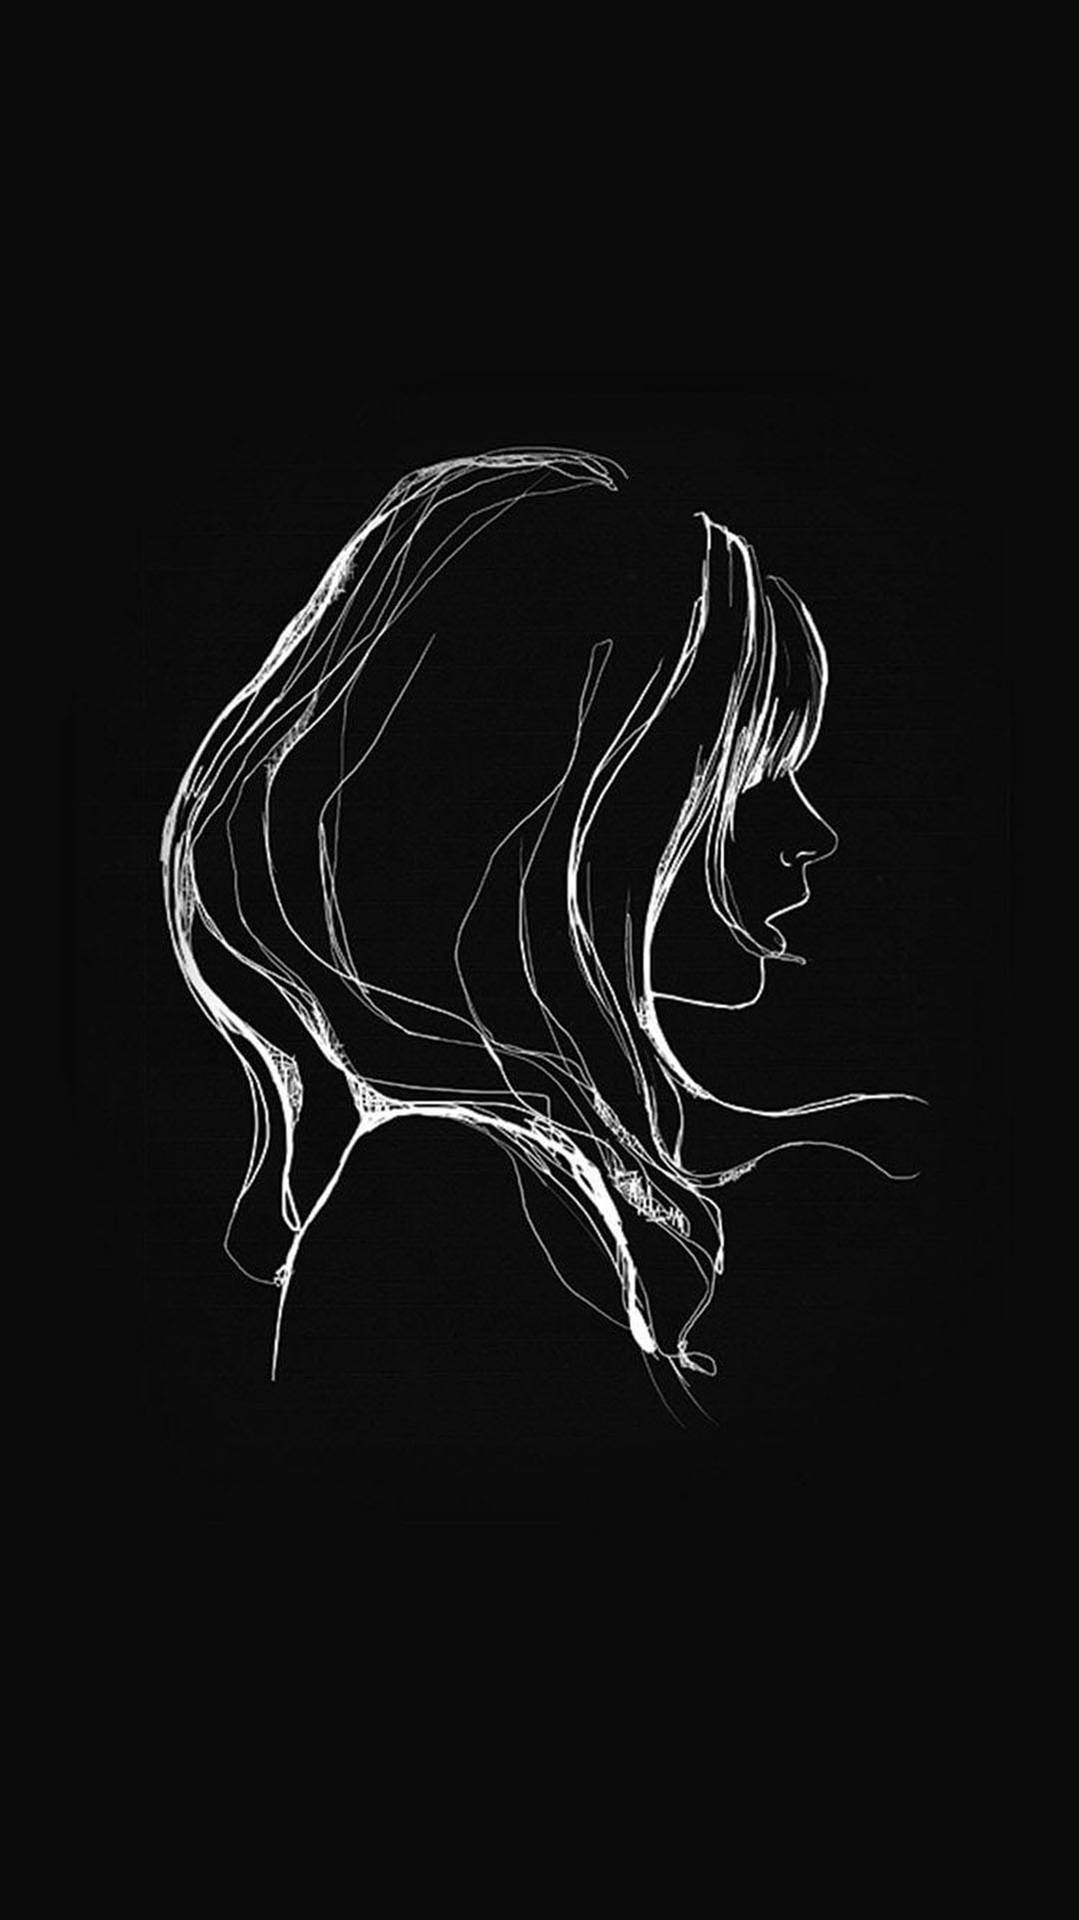 Dark Android Sad Girl Sketch Wallpaper